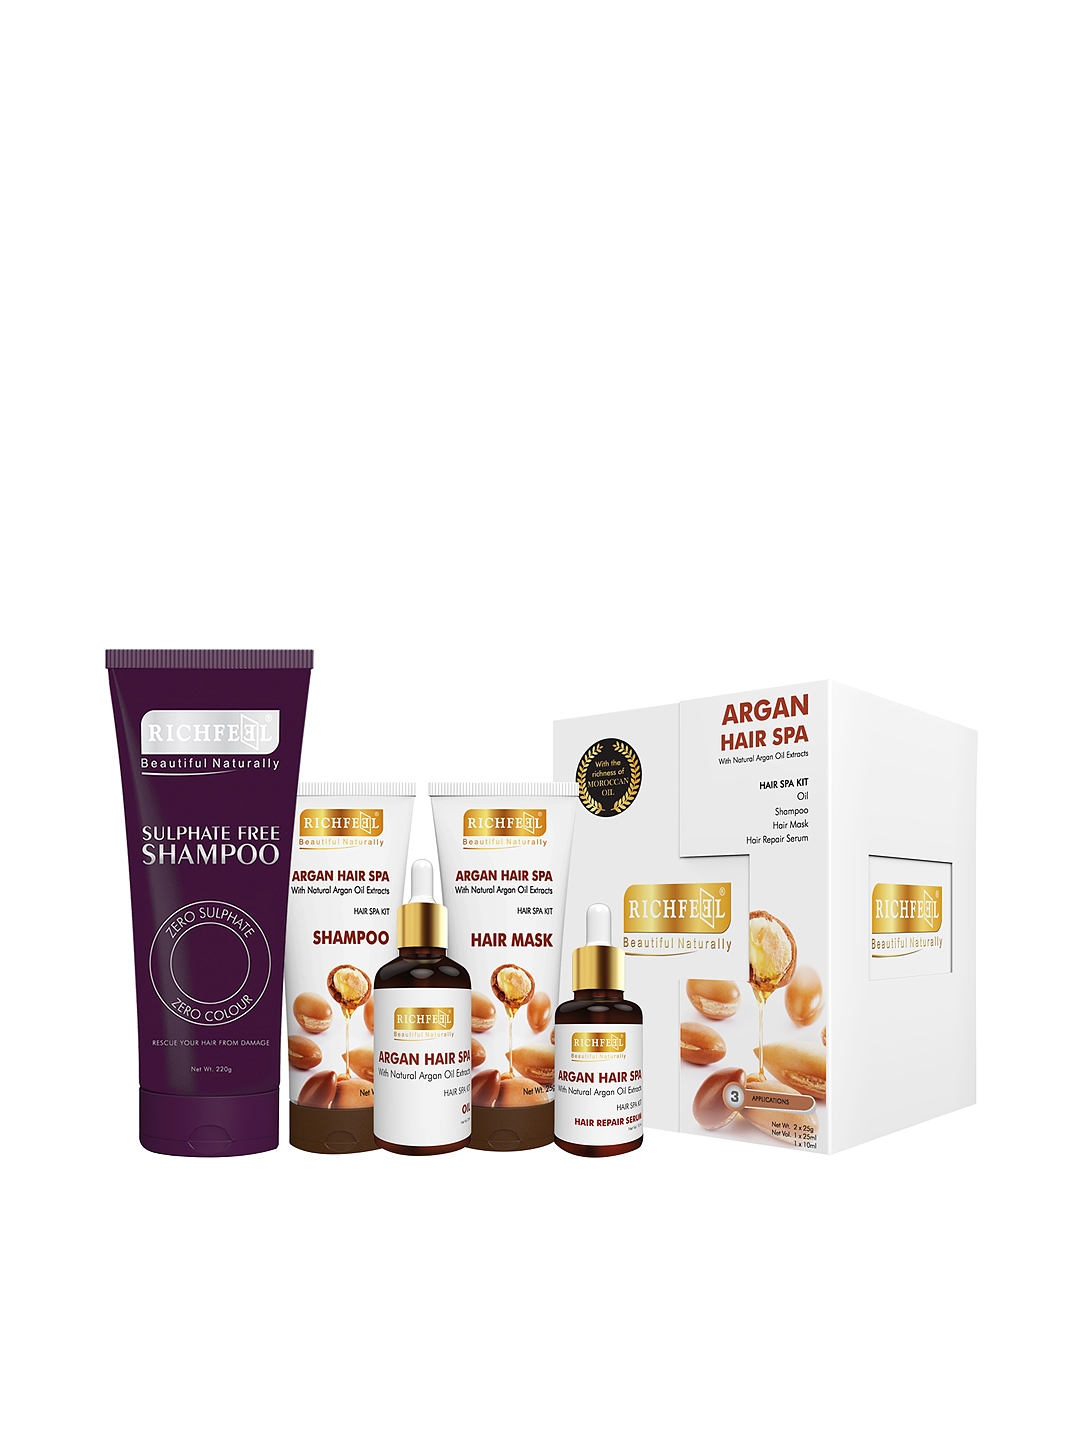 ESTAVITO Hair Spa Cream bath 500gms with Argan Oil